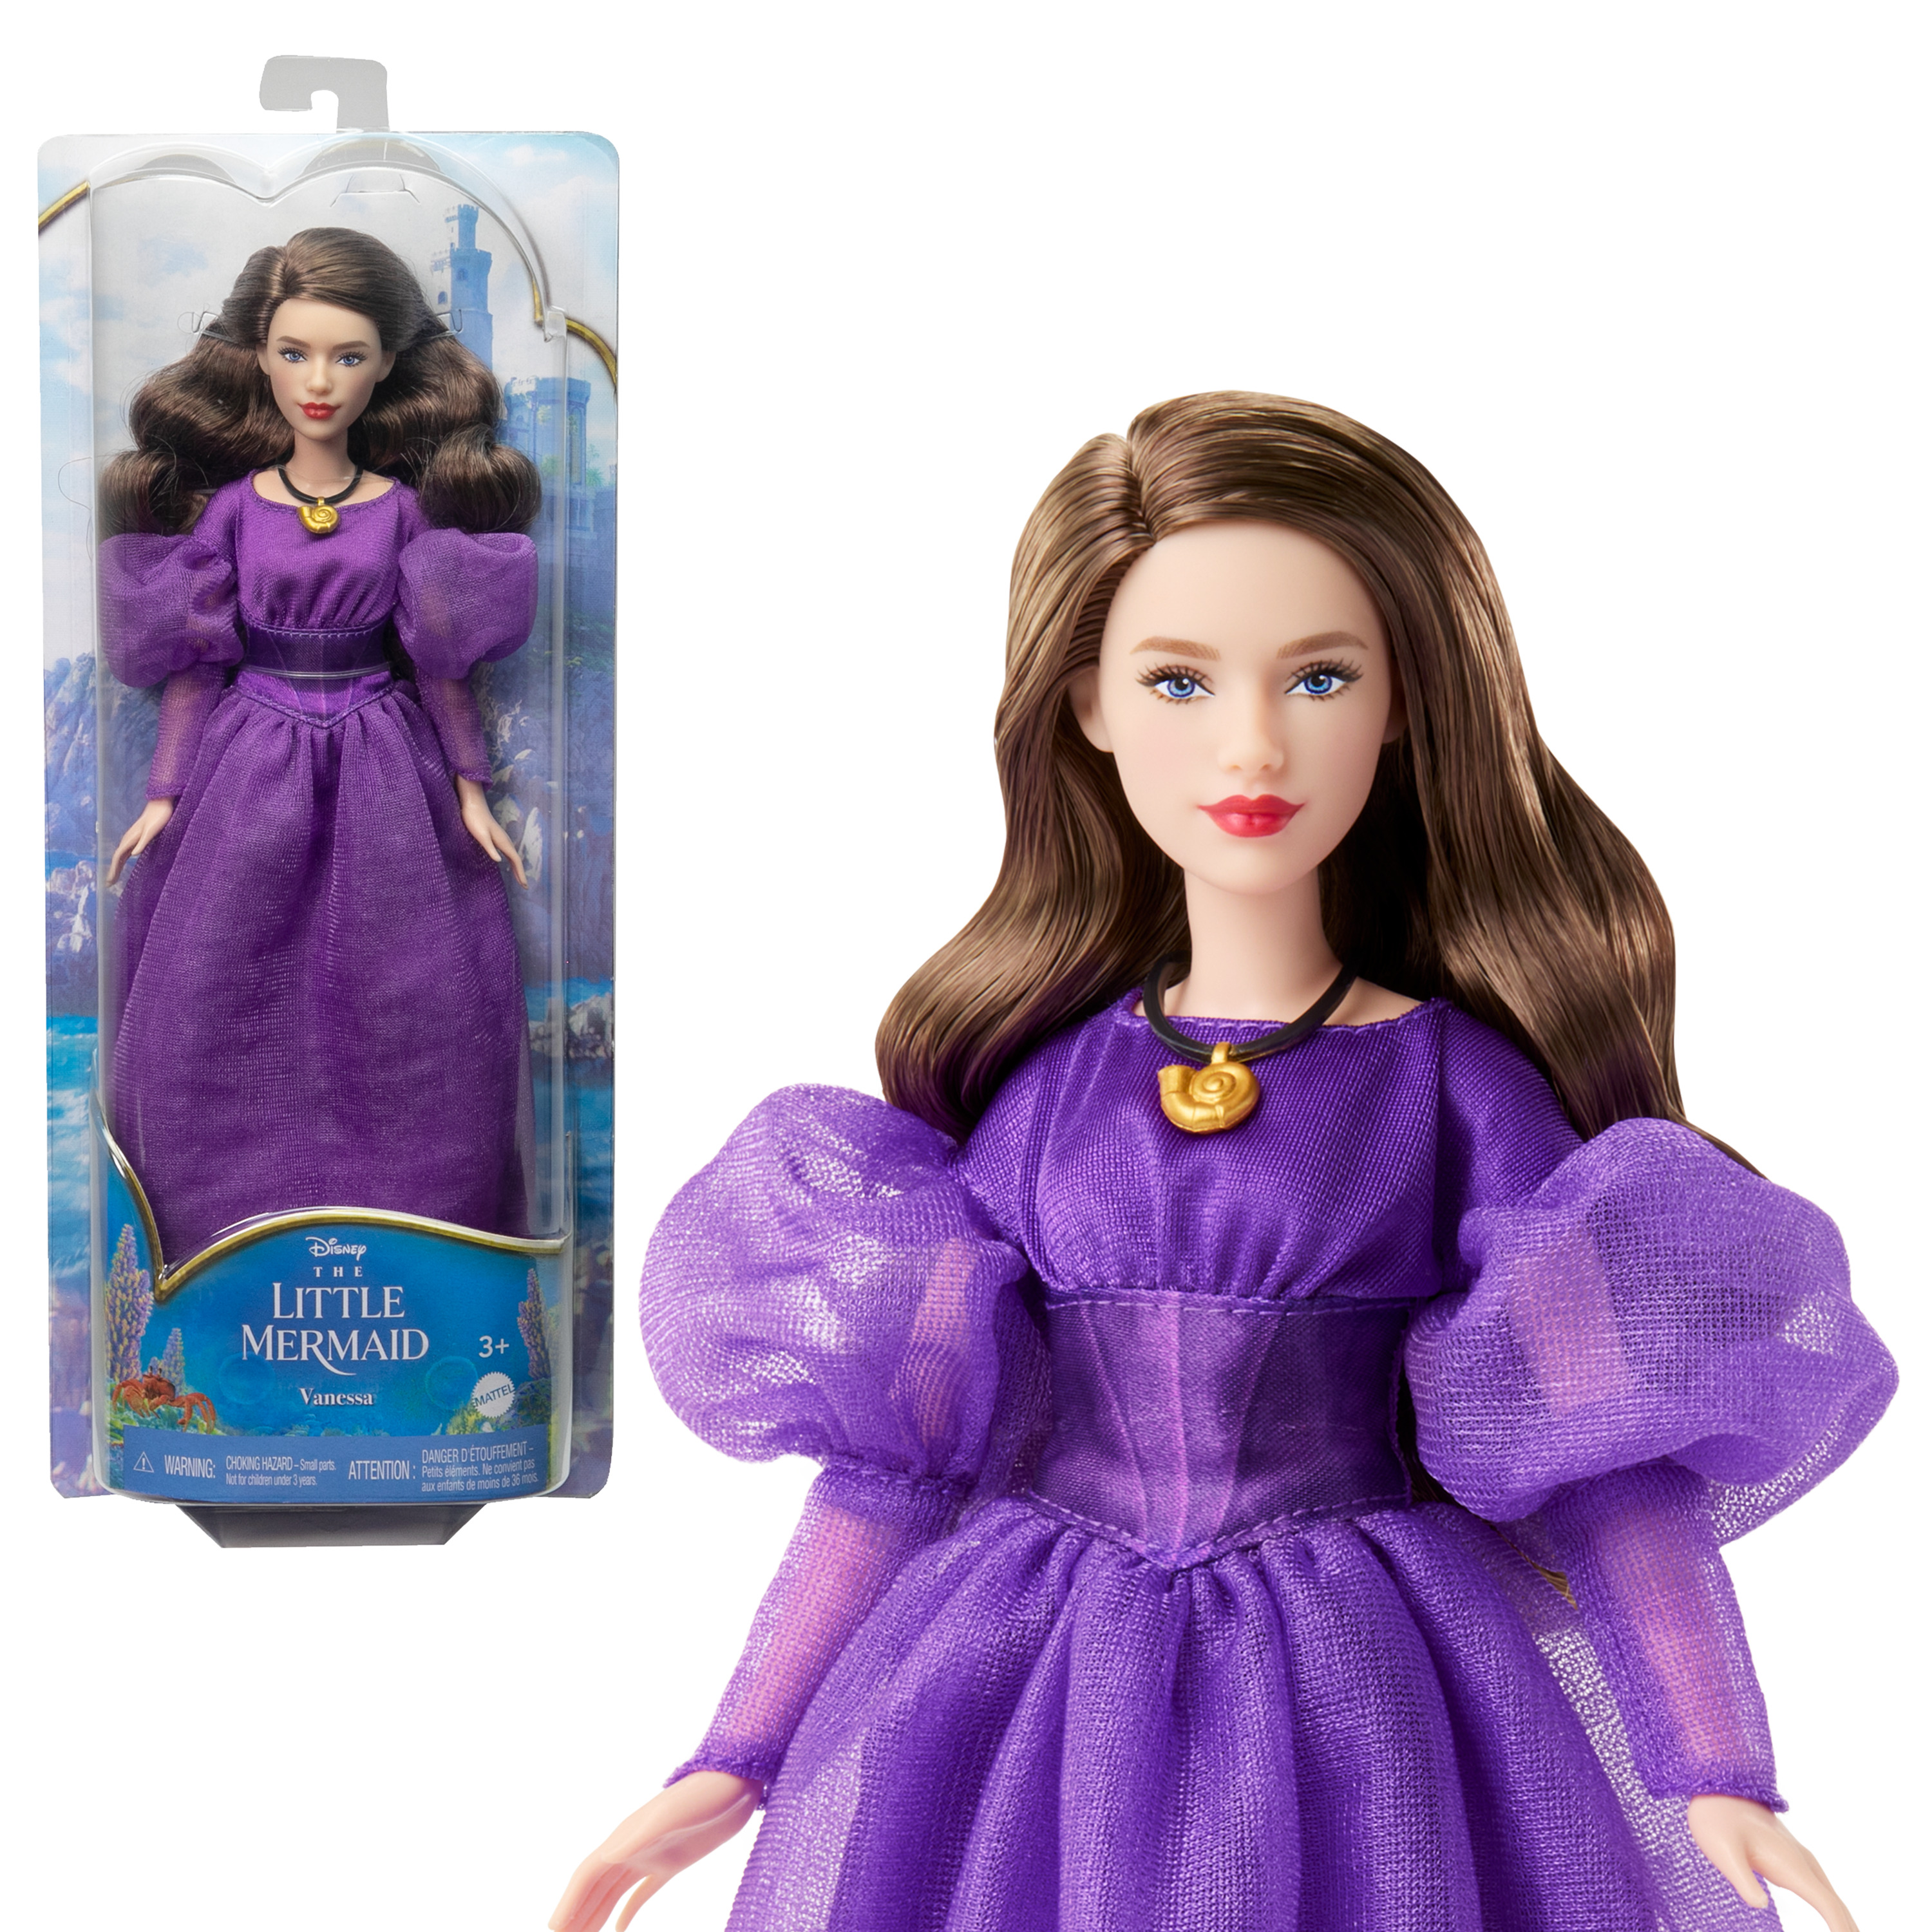 Disney The Little Mermaid Vanessa Fashion Doll in Signature Purple Dress - image 1 of 6